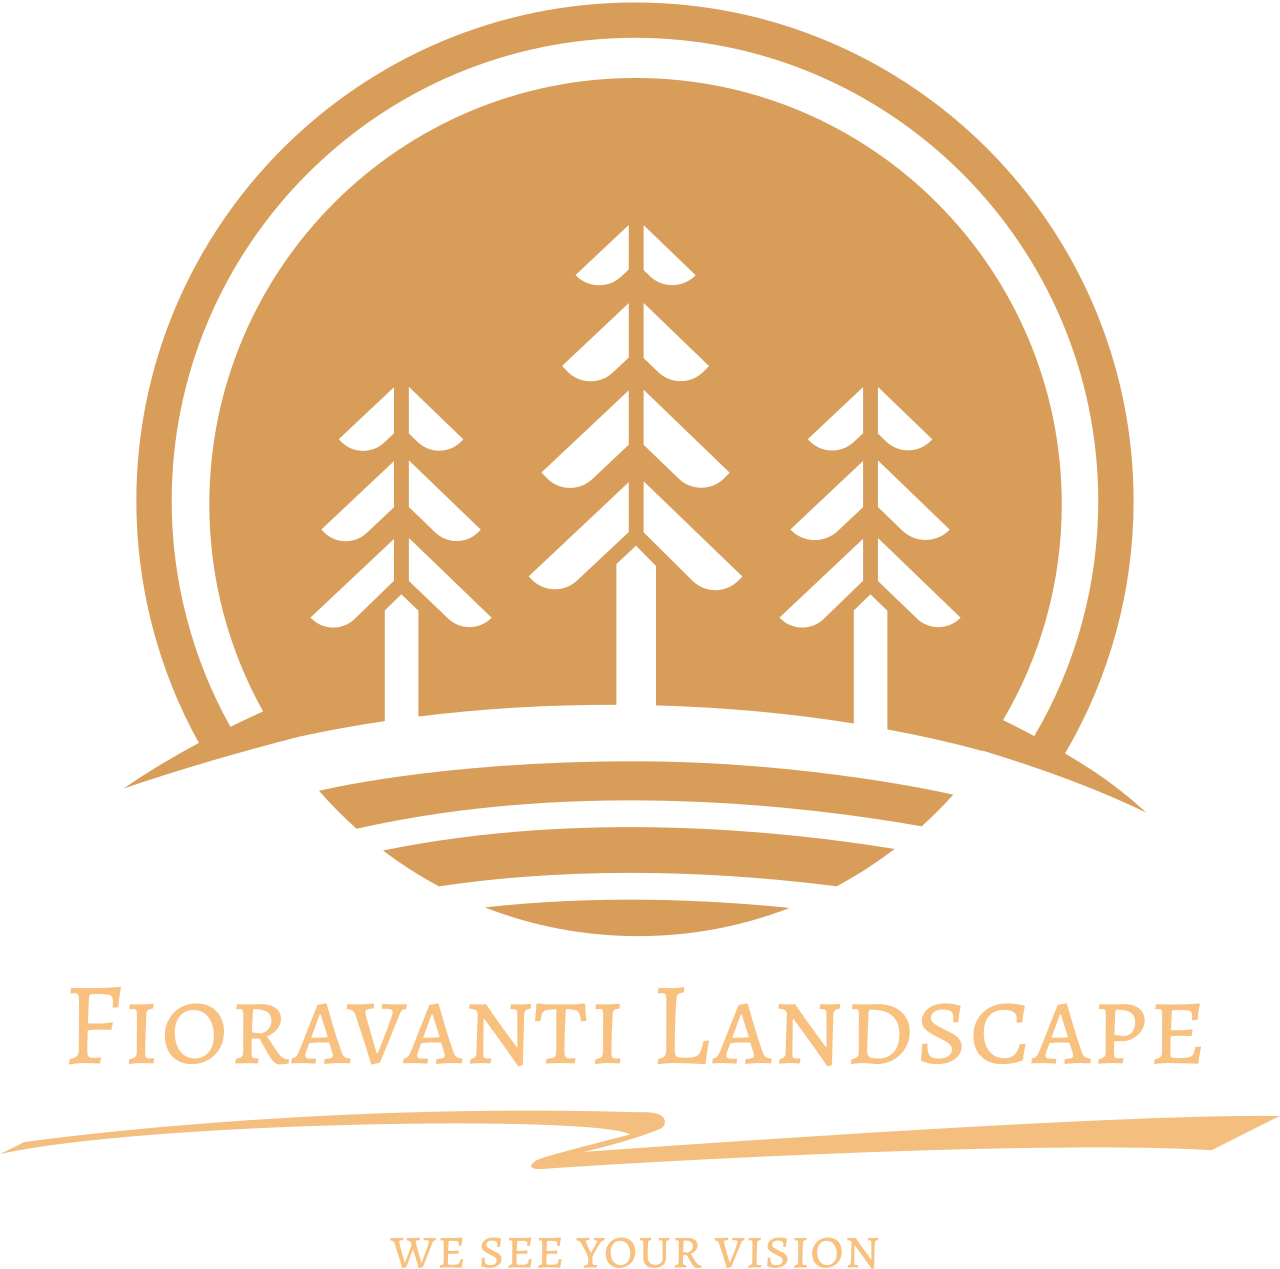 Fioravanti Landscape's logo